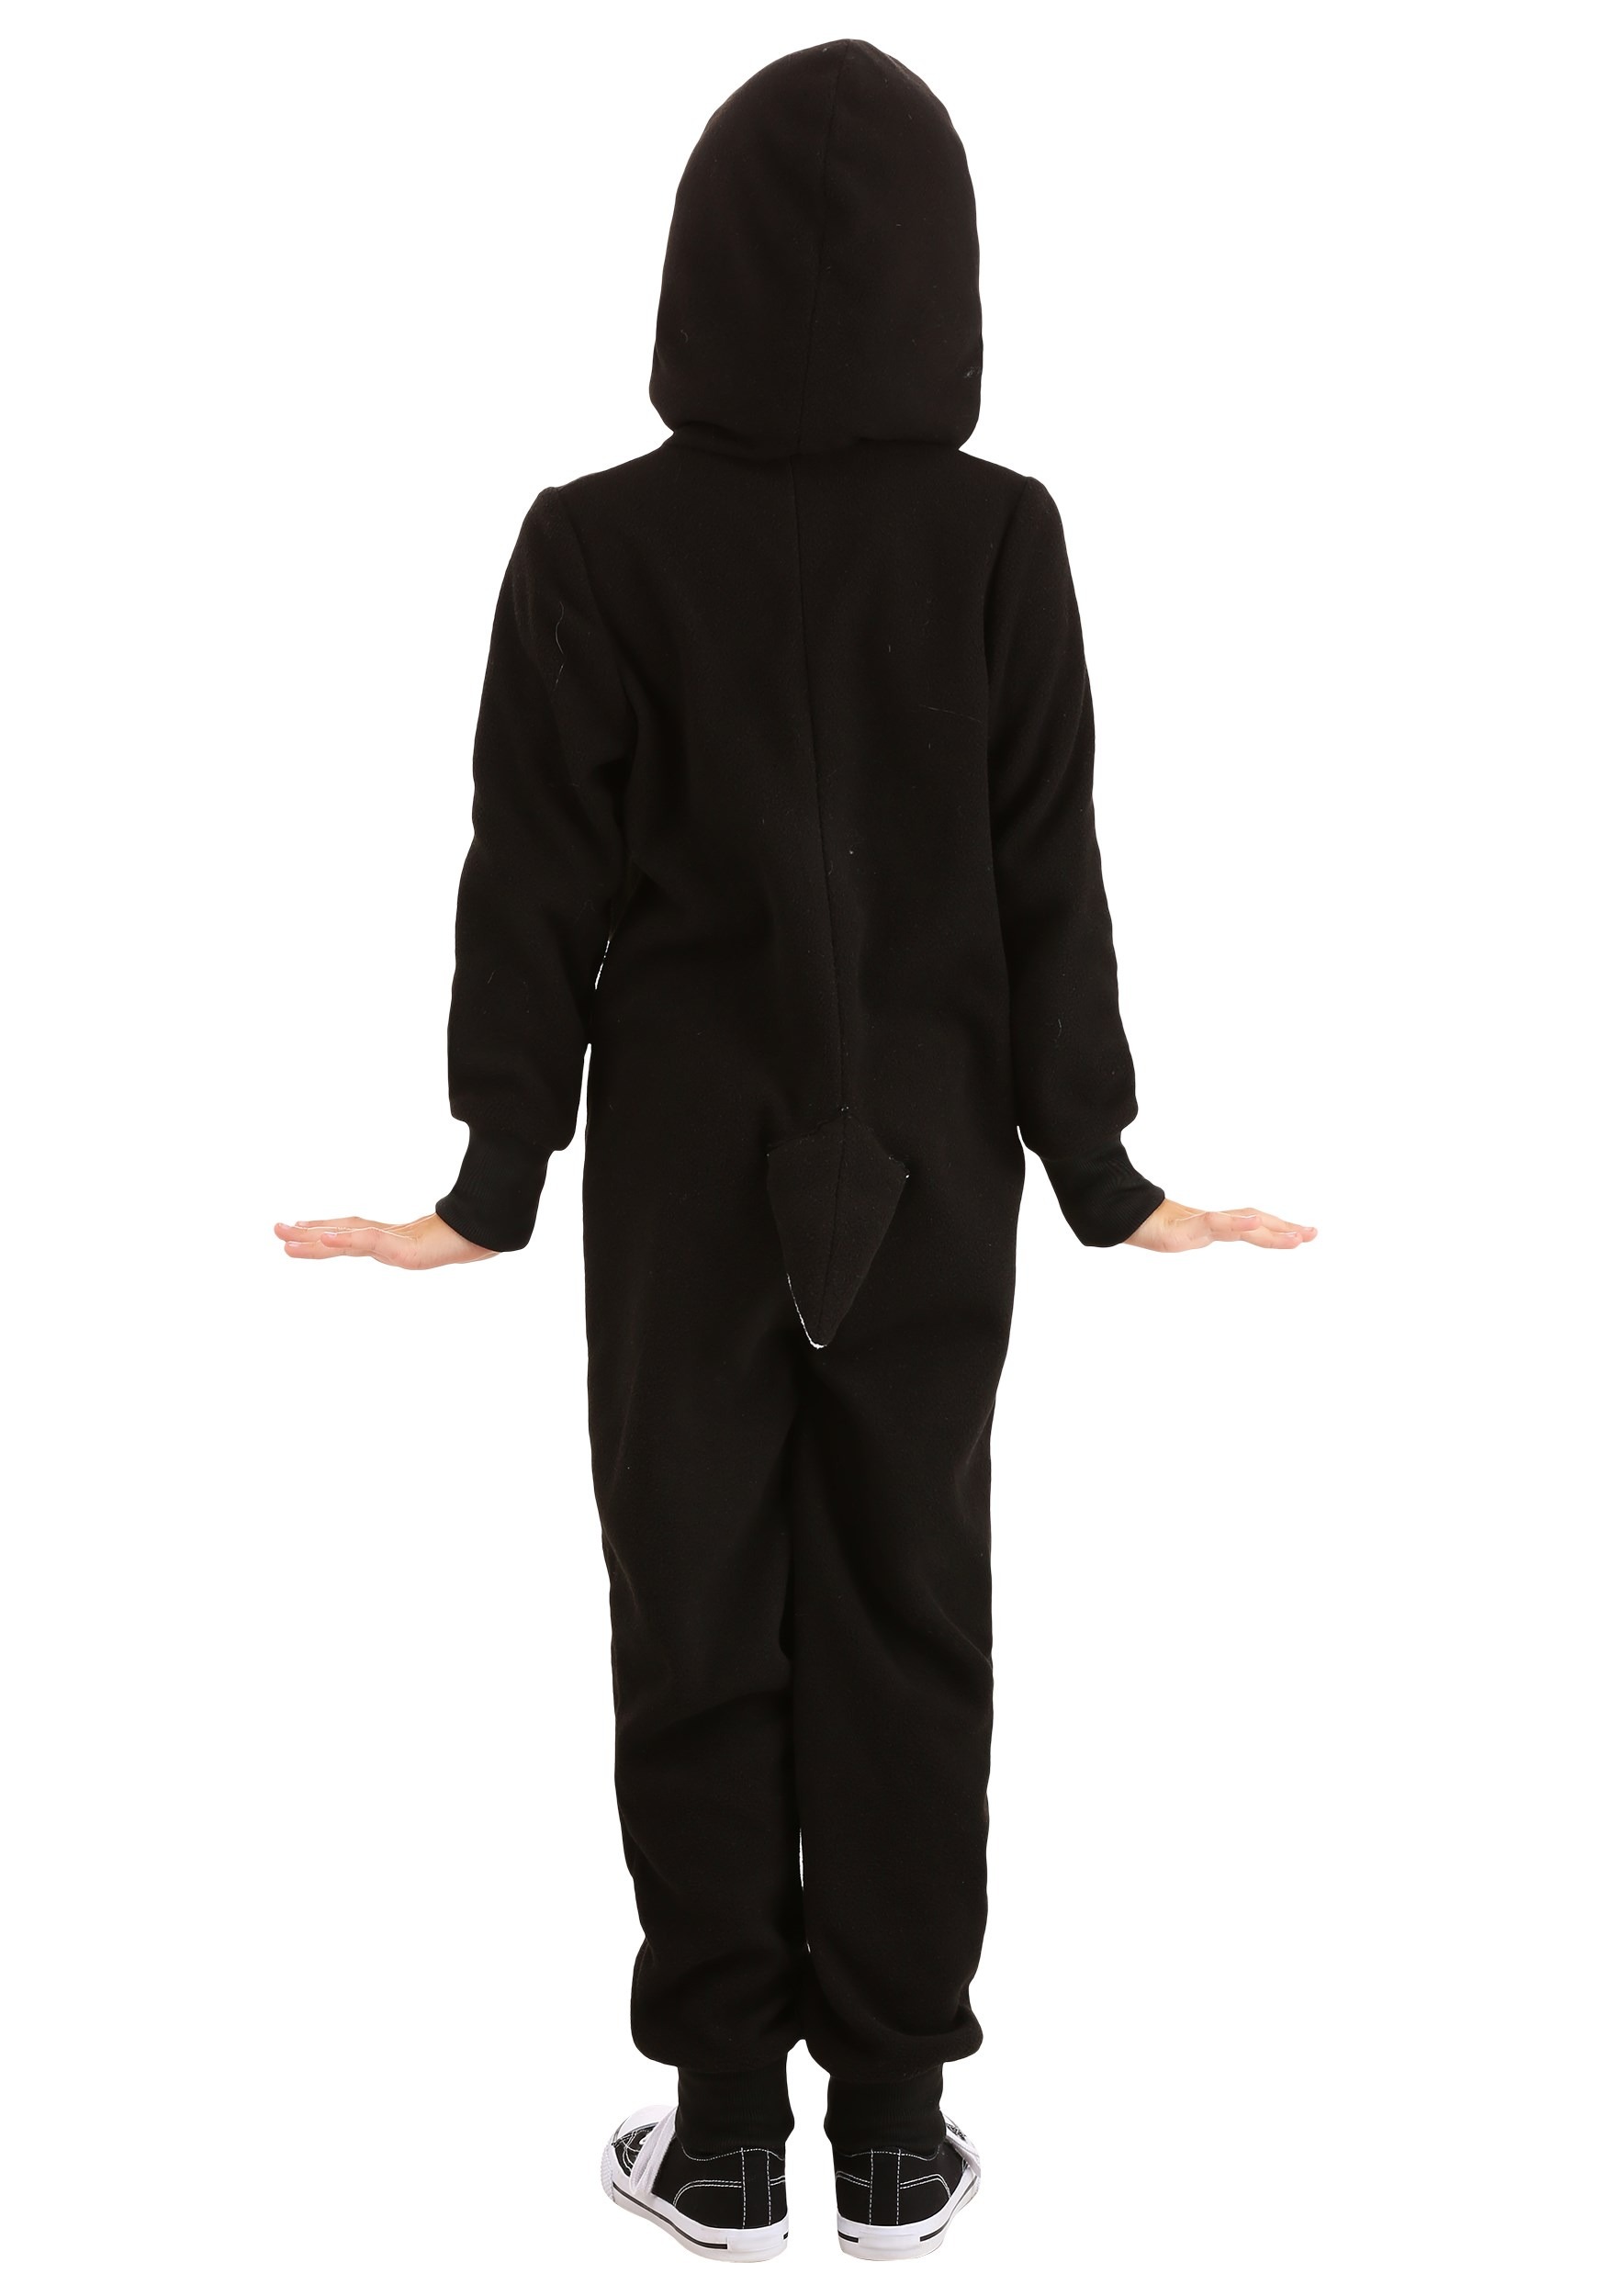 Pajama Penguin Child Costume